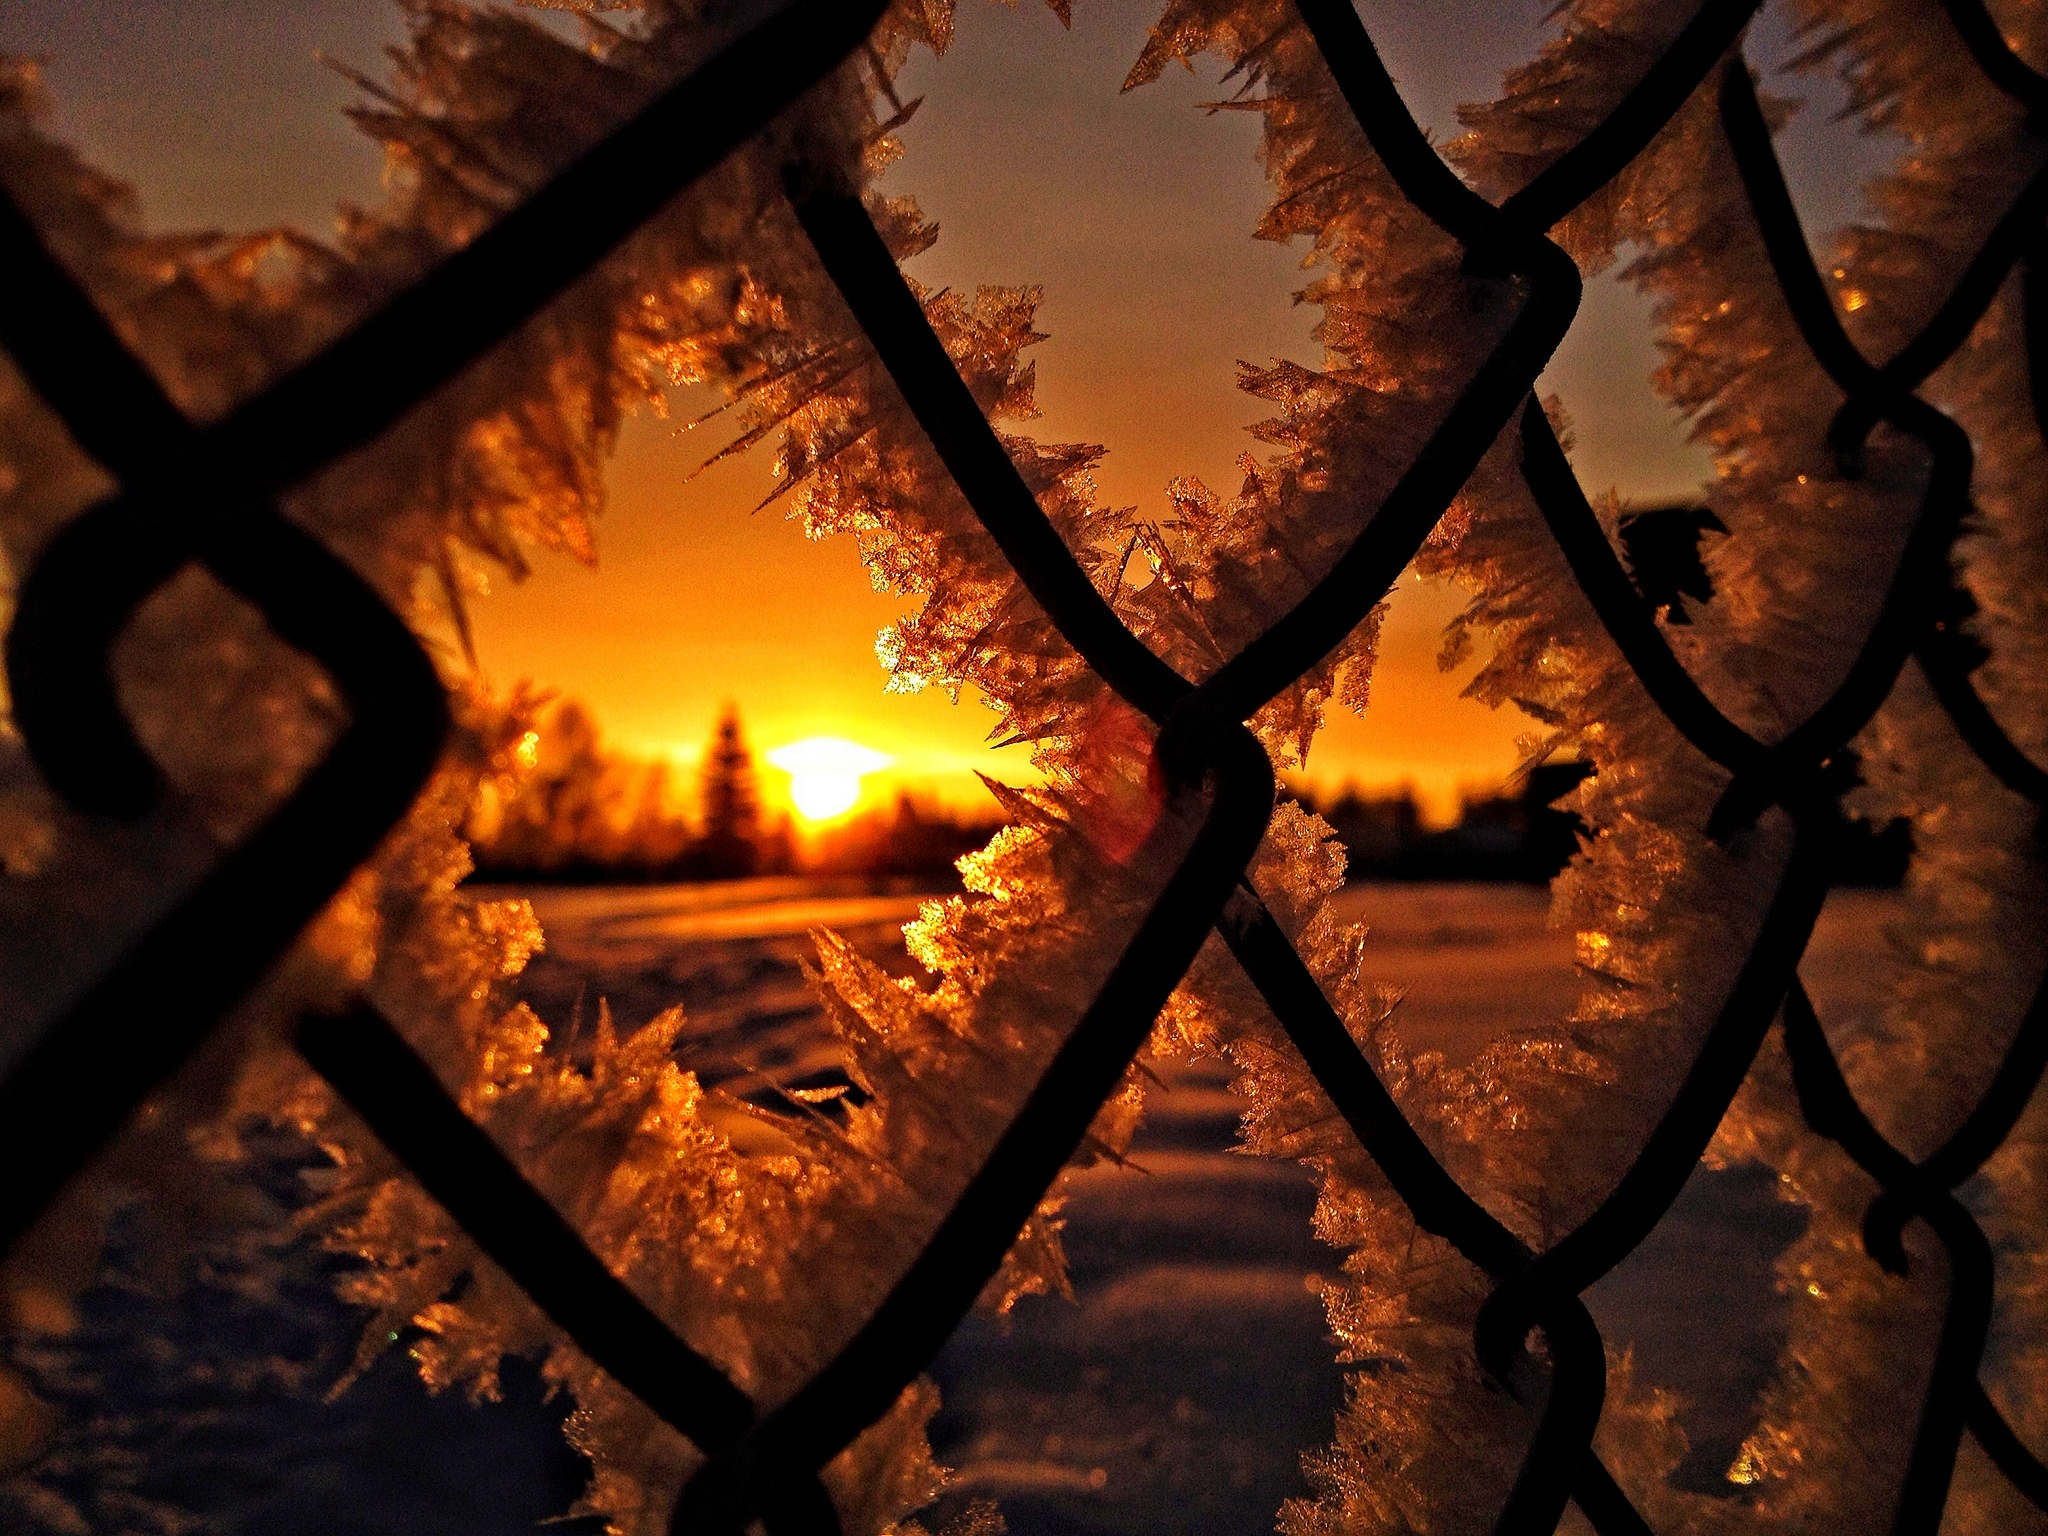 забор снег зима закат the fence snow winter sunset загрузить